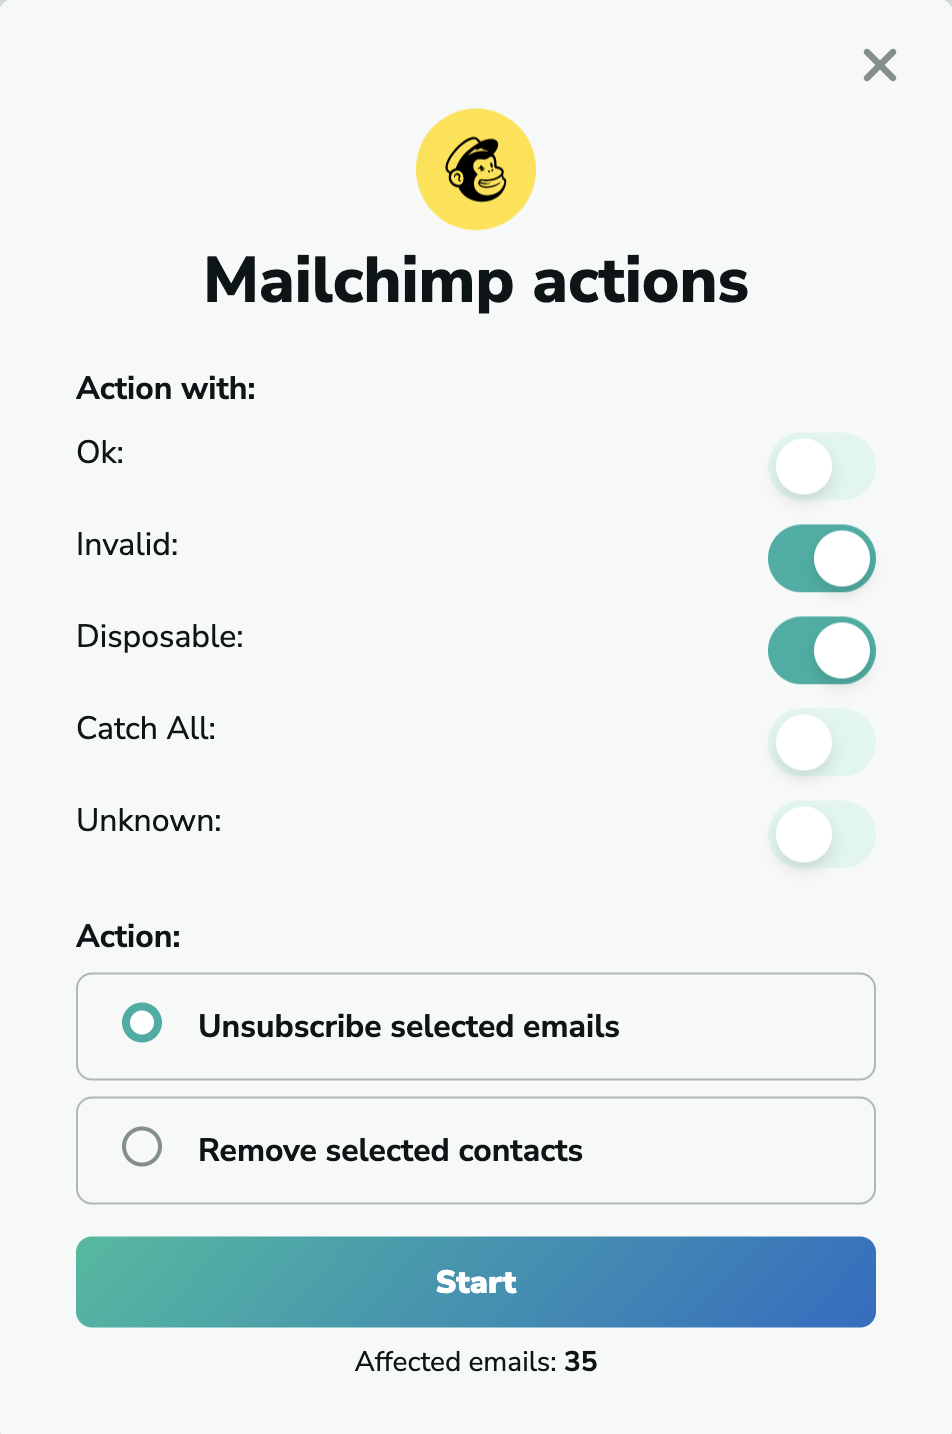 Mailchimp unsubscribe emails in MillionVerifier